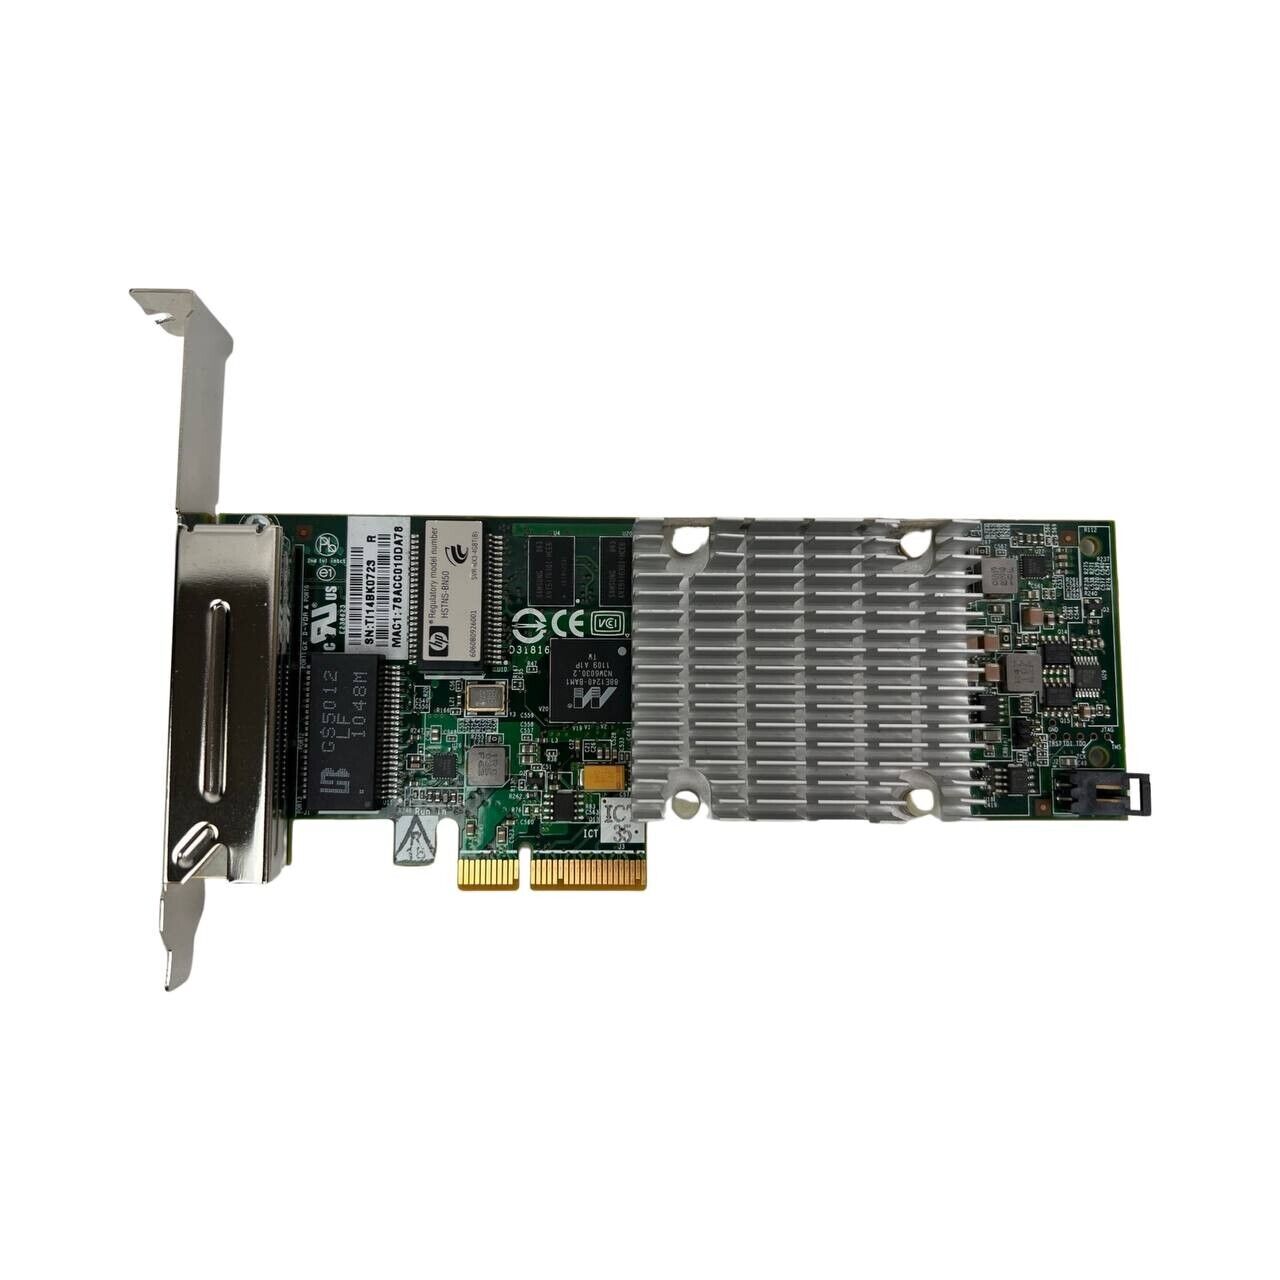 HP NC375T PCIe QUAD PORT GIGABIT SERVER ADAPTER 491176-001 539931-001 538696-B21